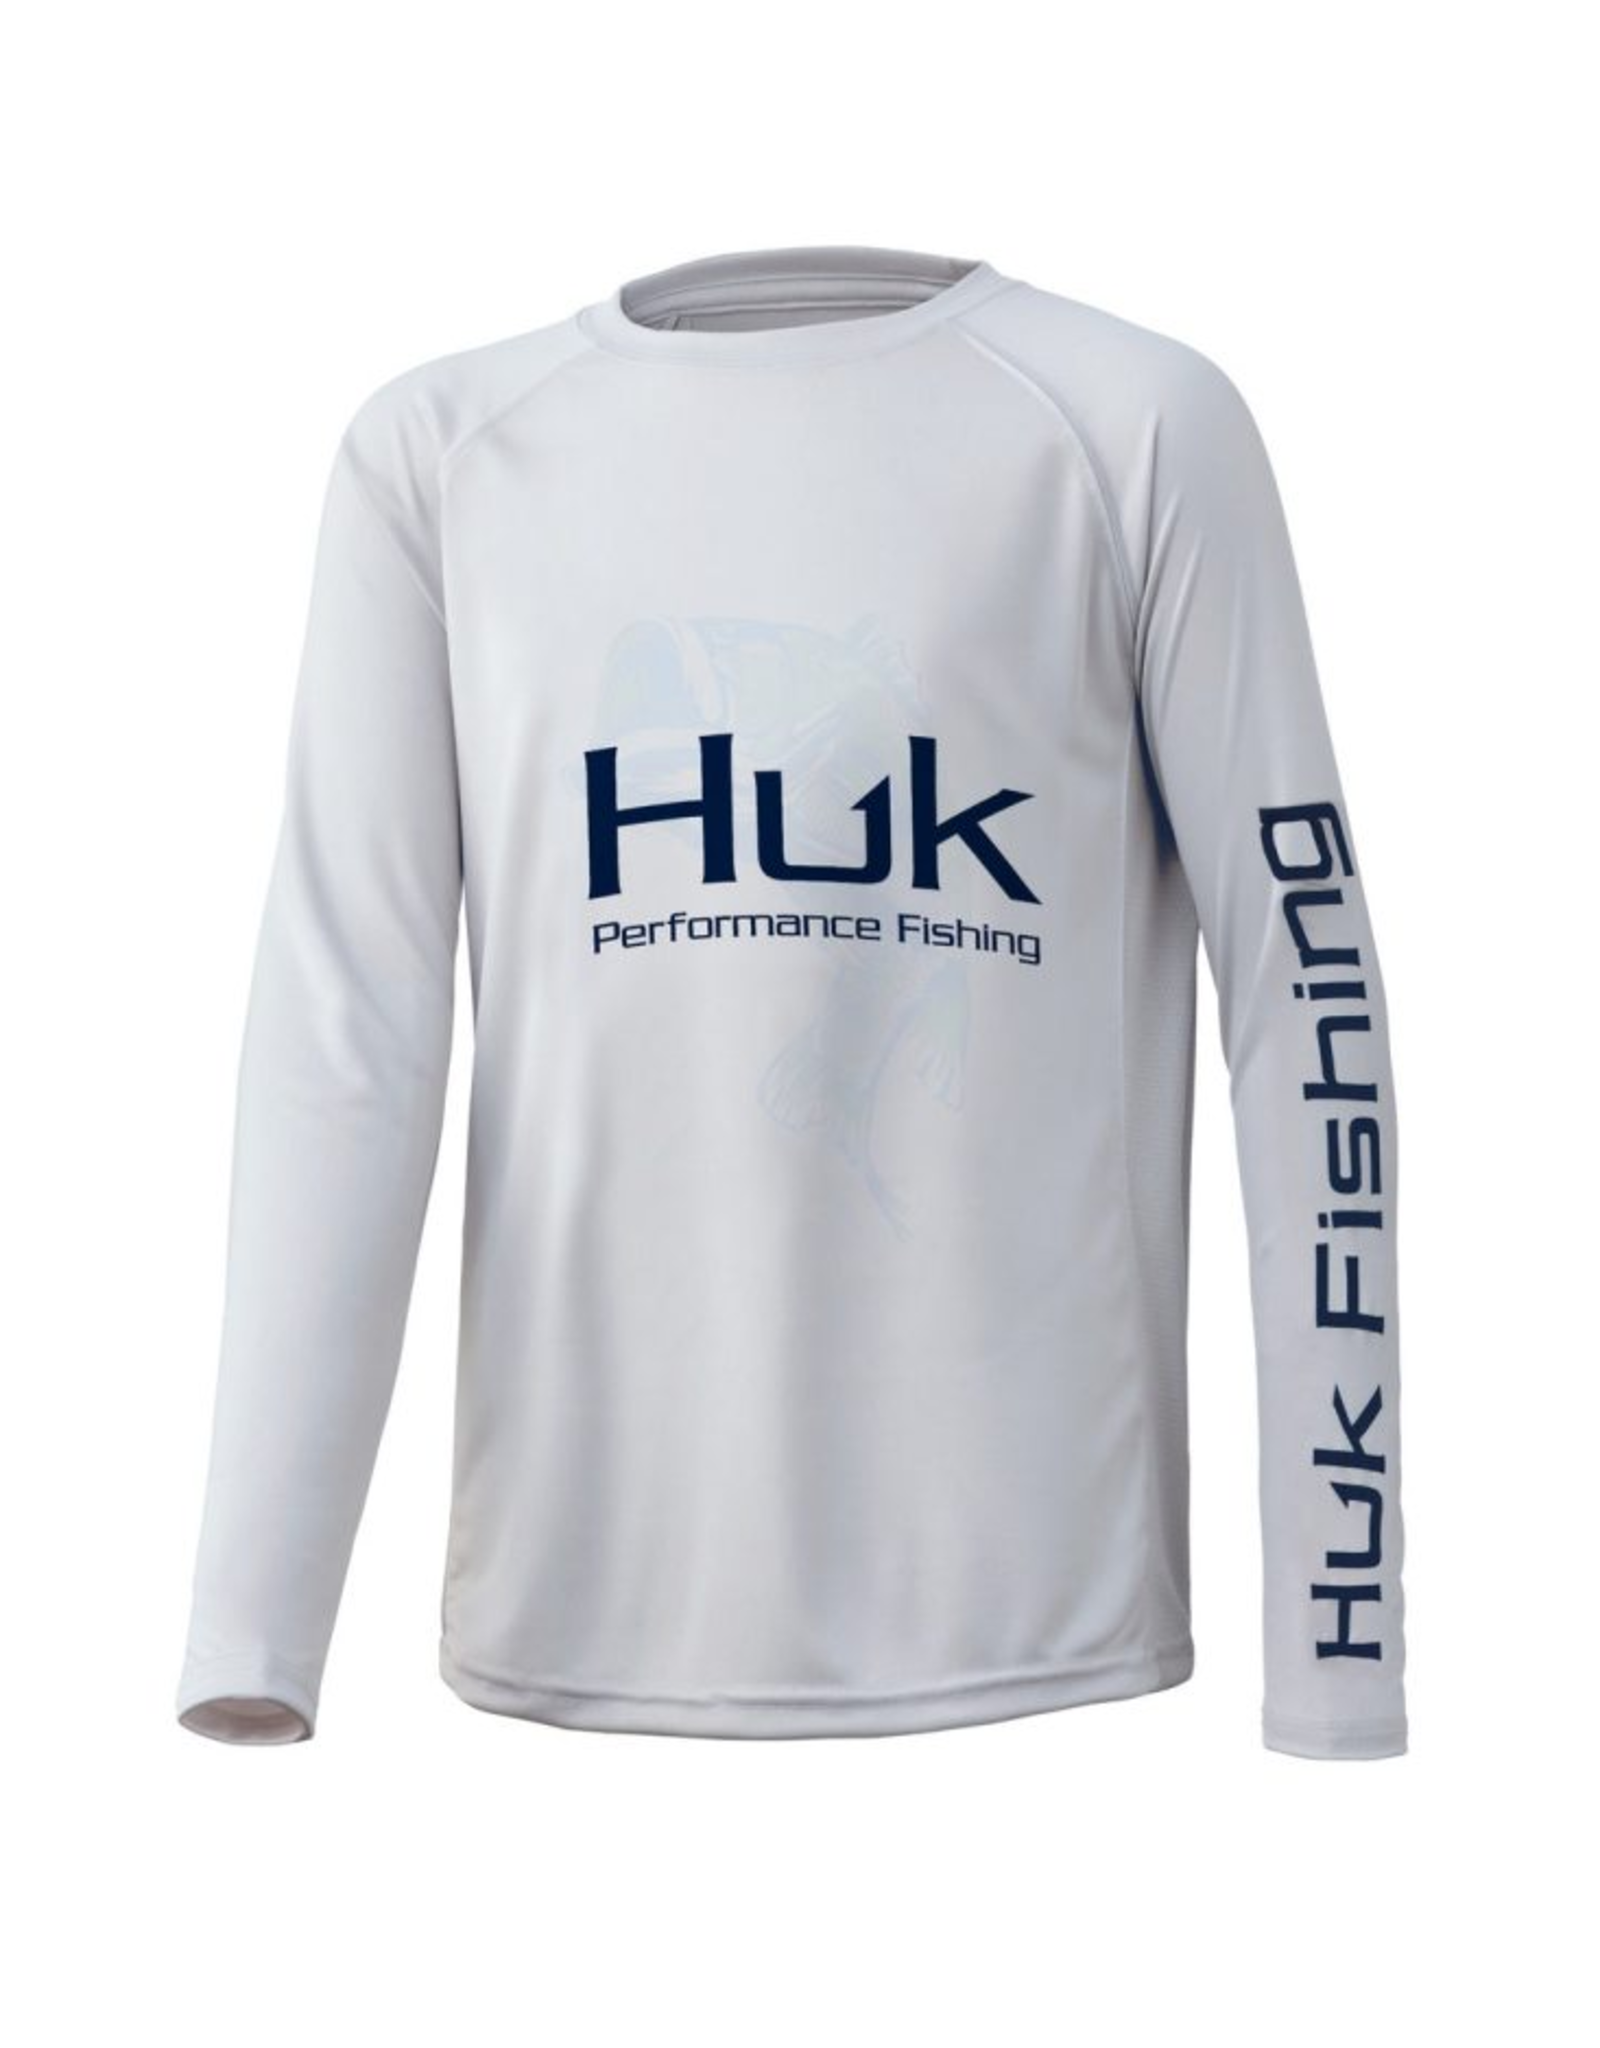 Huk Huk Youth Pursuit Long Sleeve - Big Mouth Sun White